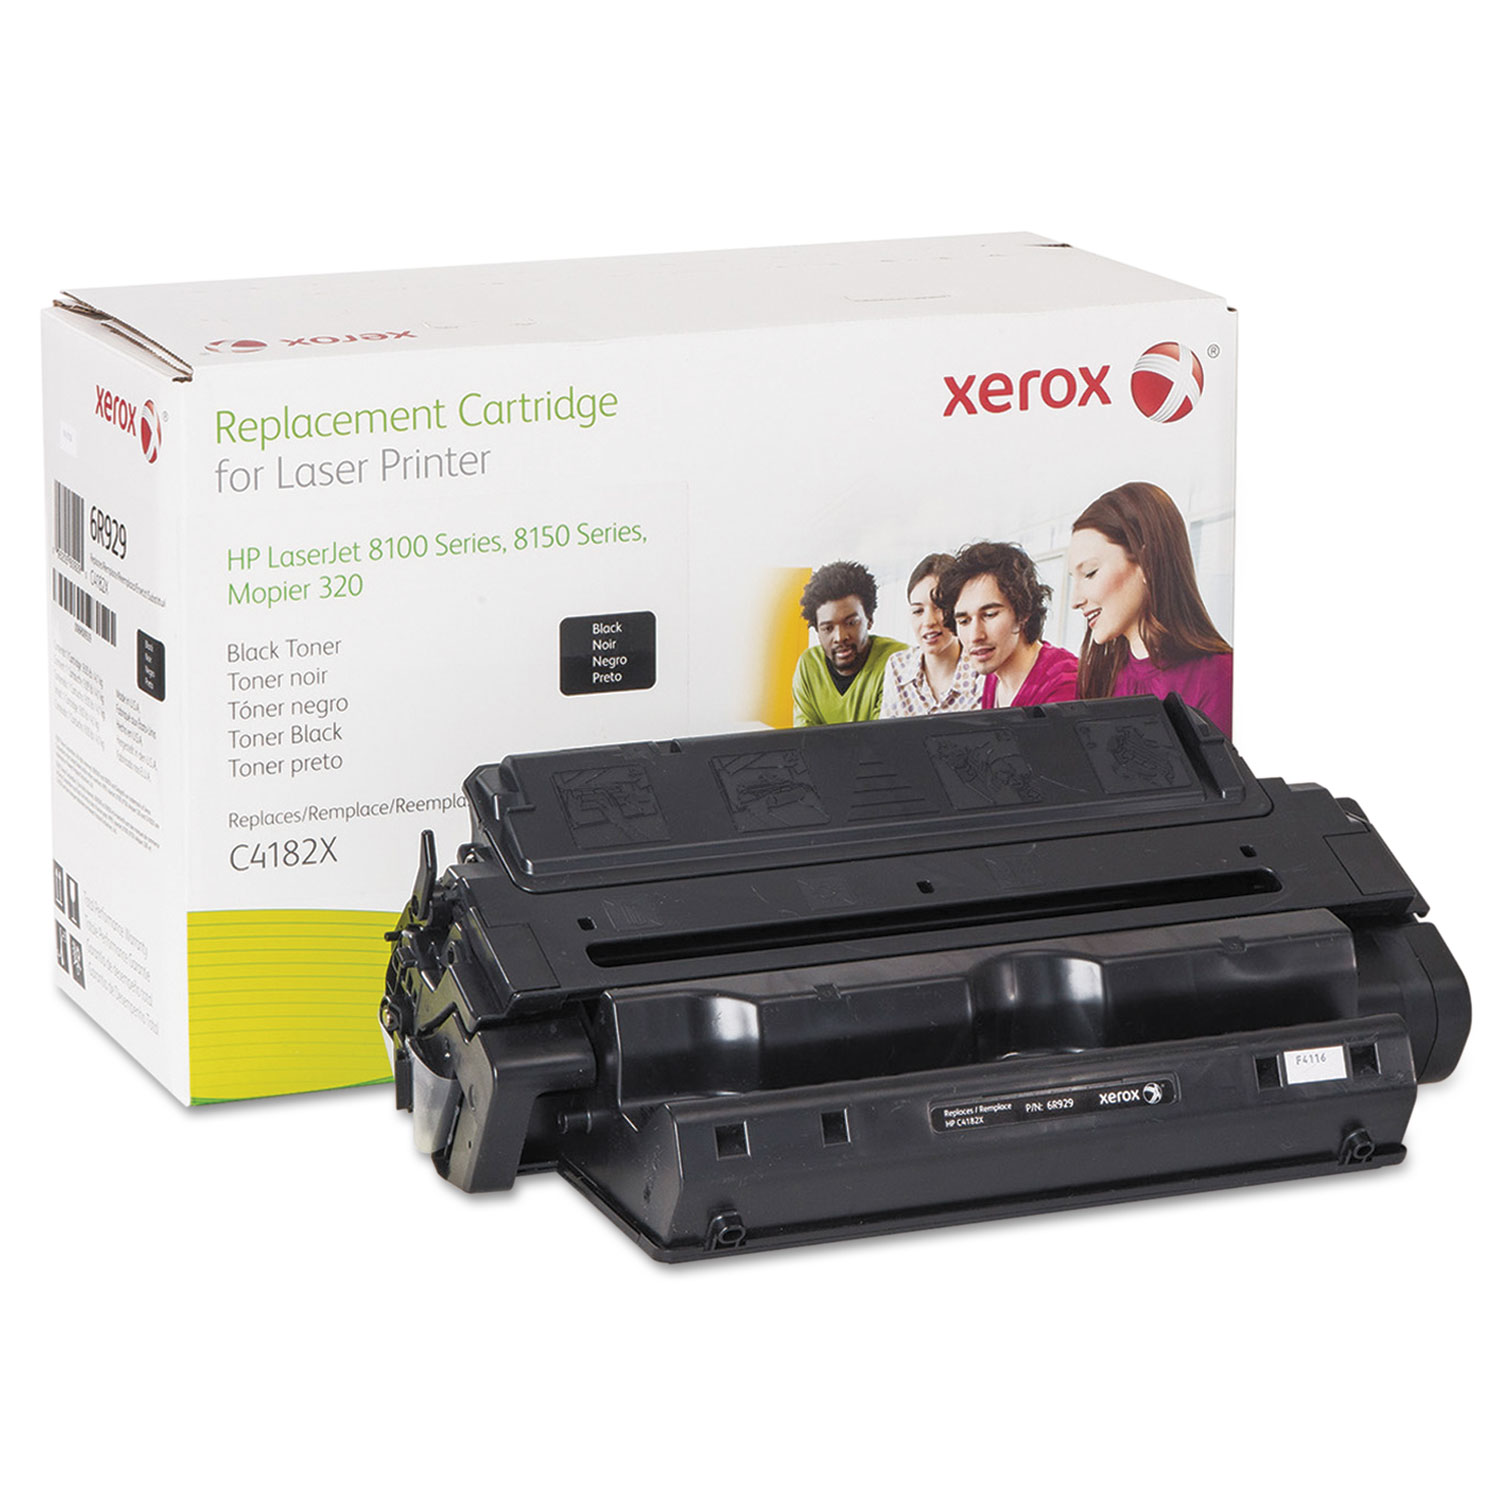  Xerox 006R00929 006R00929 Replacement High-Yield Toner for C4182X (82X), Black (XER006R00929) 